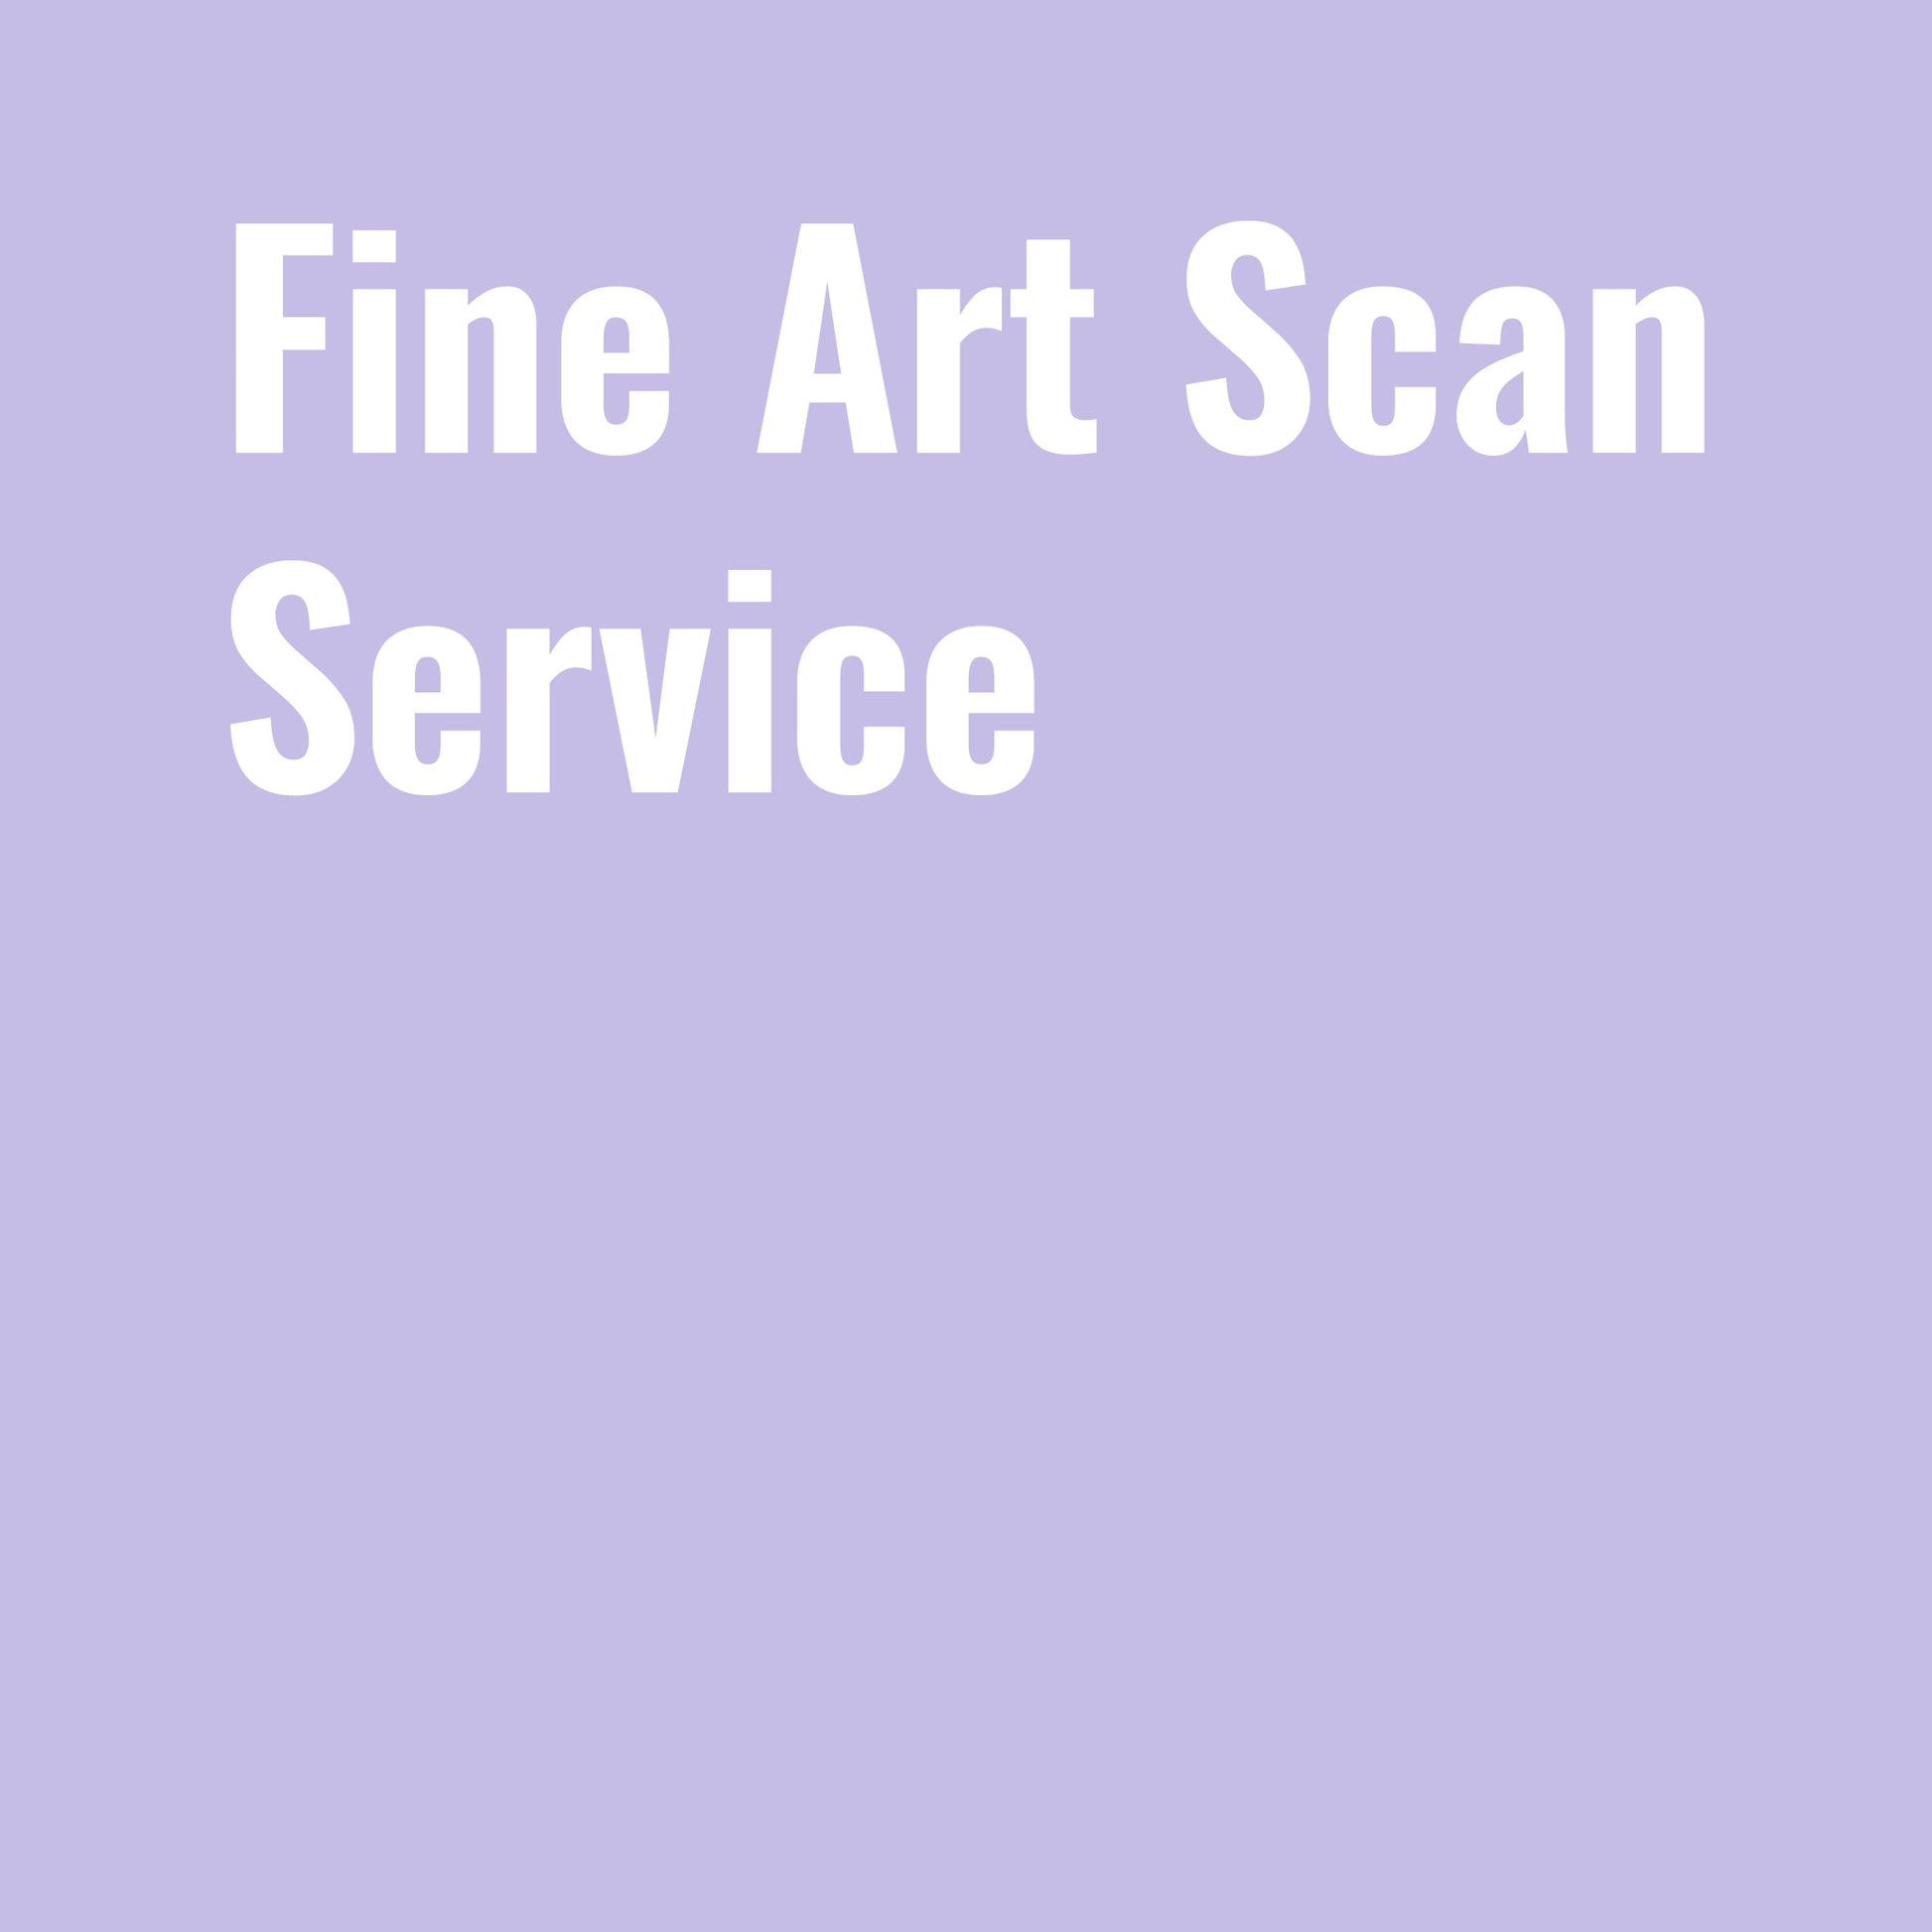 Fine Art Scan Service - by K. A. Artist Shop Services - K. A. Artist Shop